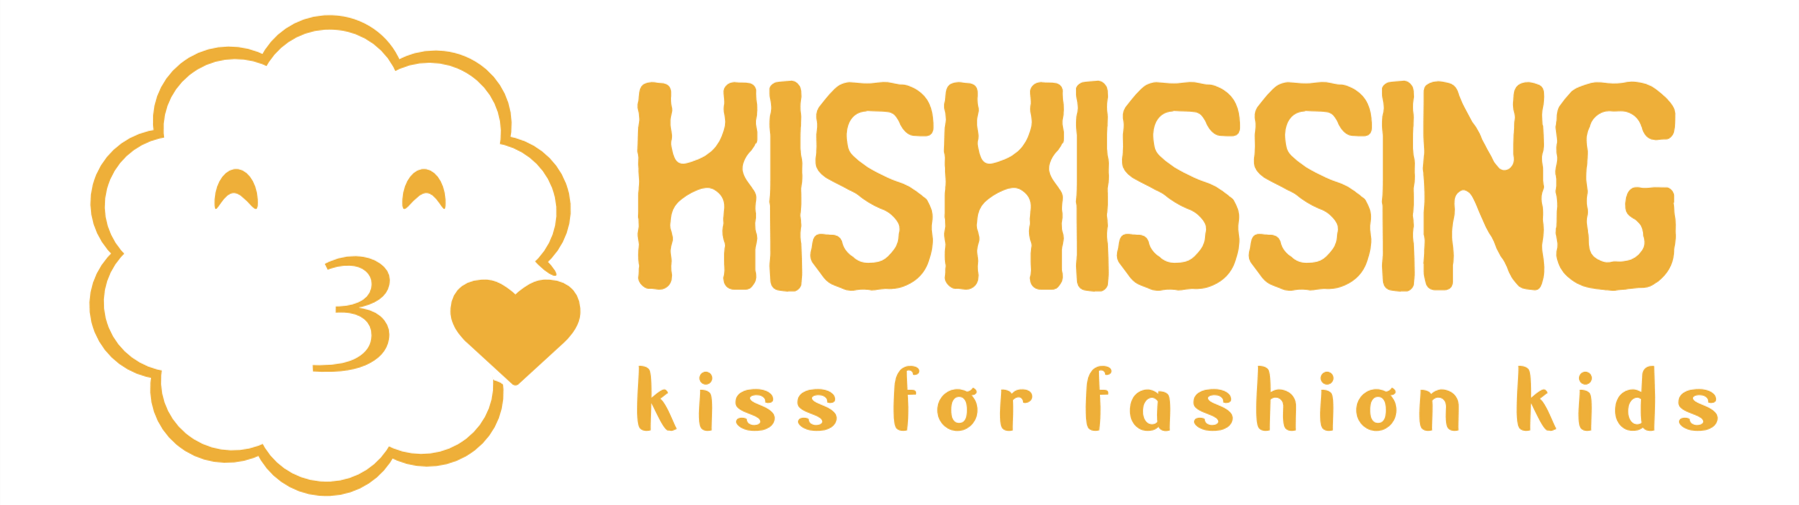 kiskissing logo